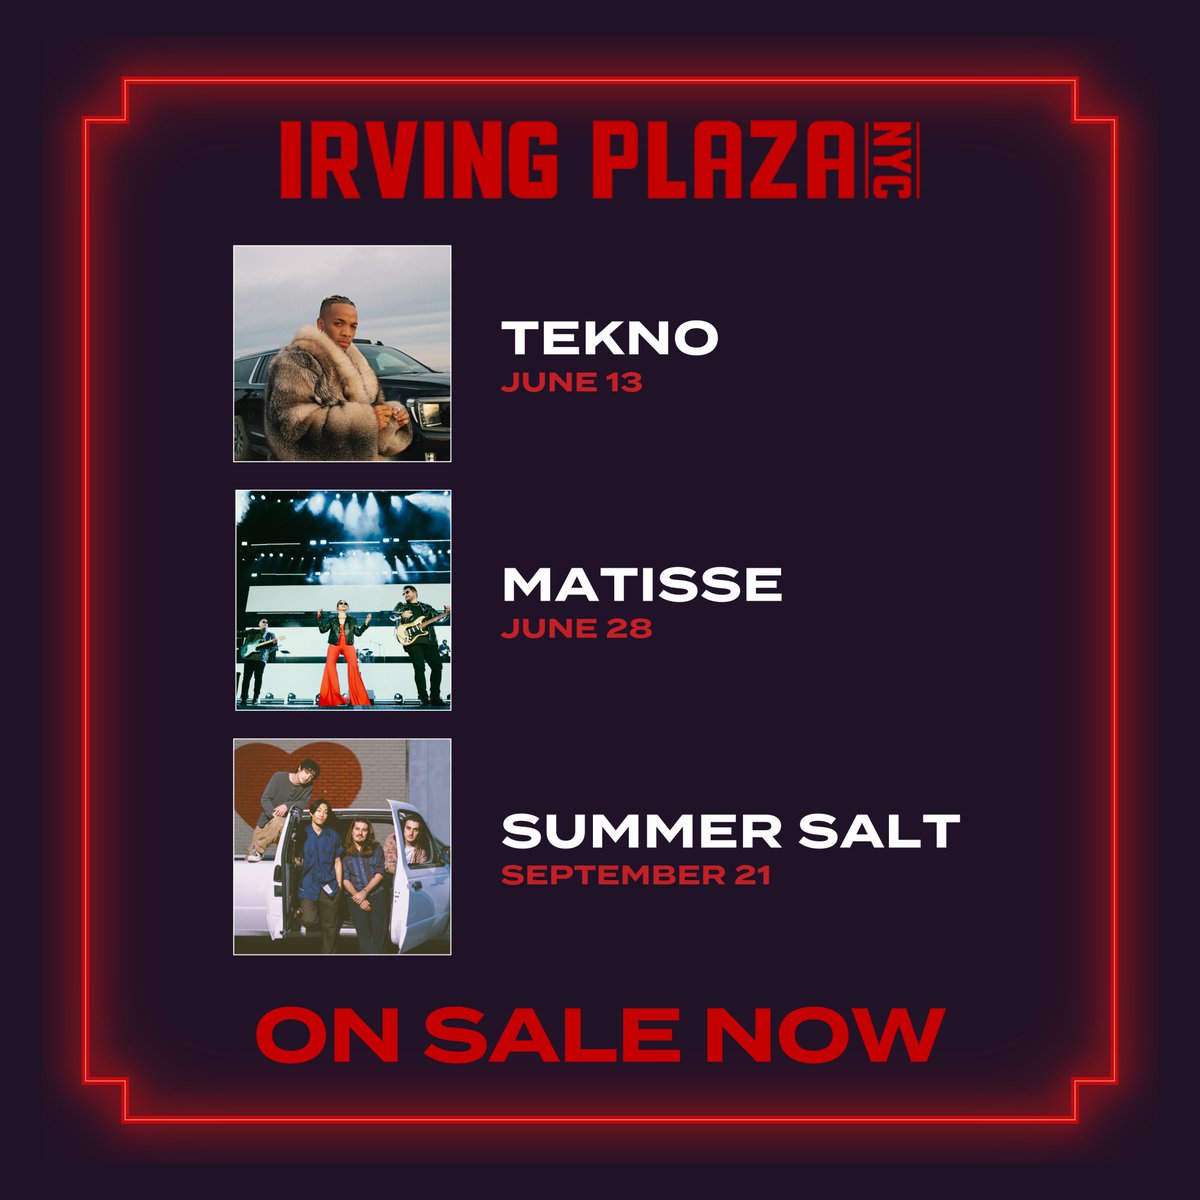 ⚠️ ON SALE NOW ⚠️ Get tickets at livemu.sc/3uWysBc 🎟 Tekno - June 13th 🎟 Matisse - June 28th 🎟 Summer Salt - September 21st